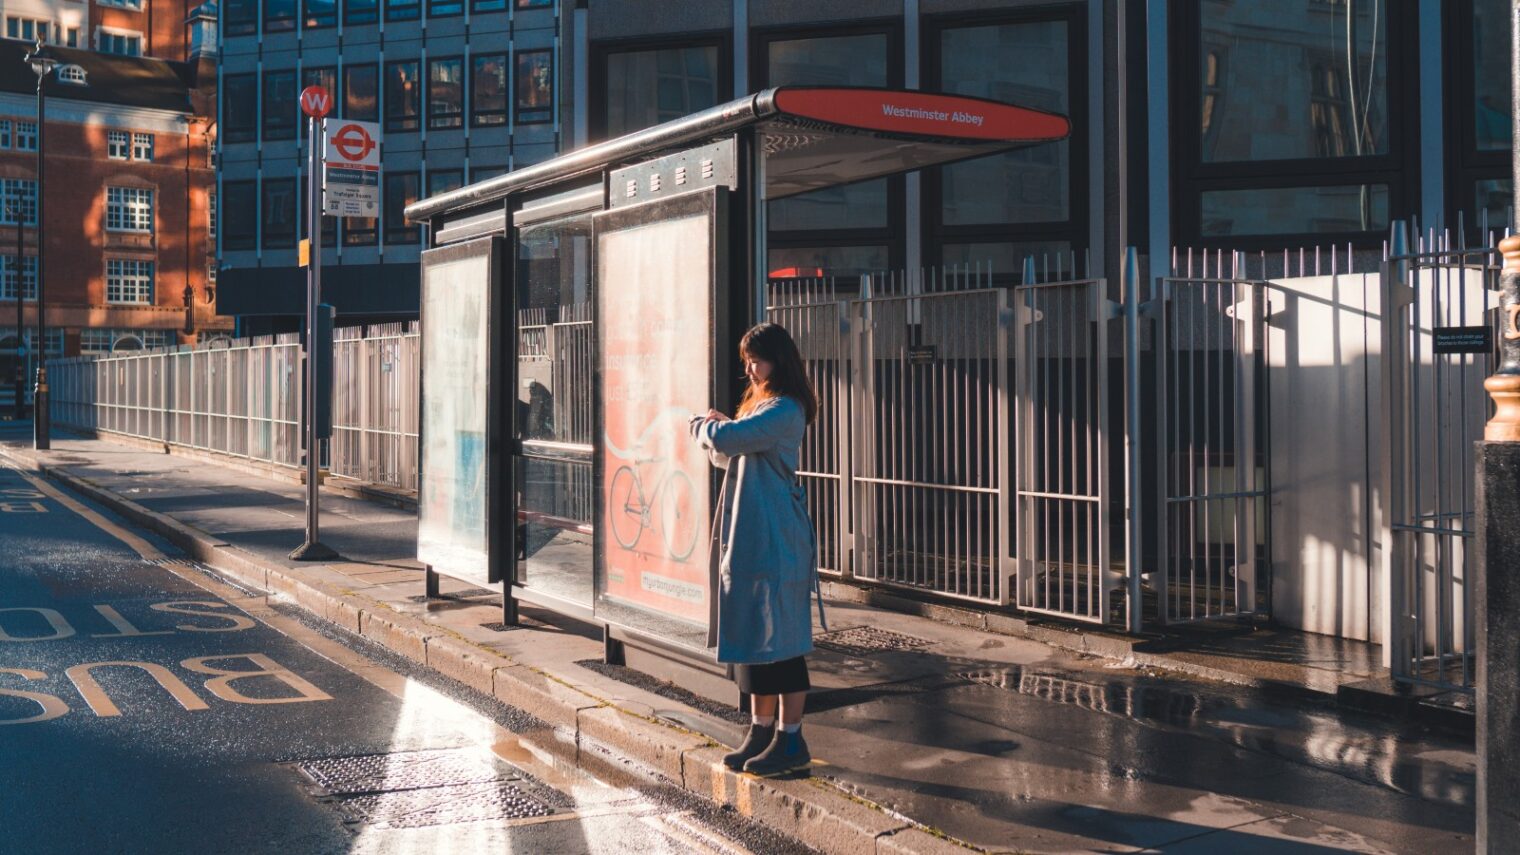 Startup Optibus uses AI and optimization to improve public transportation across the world. Photo by Johen Redman on Unsplash